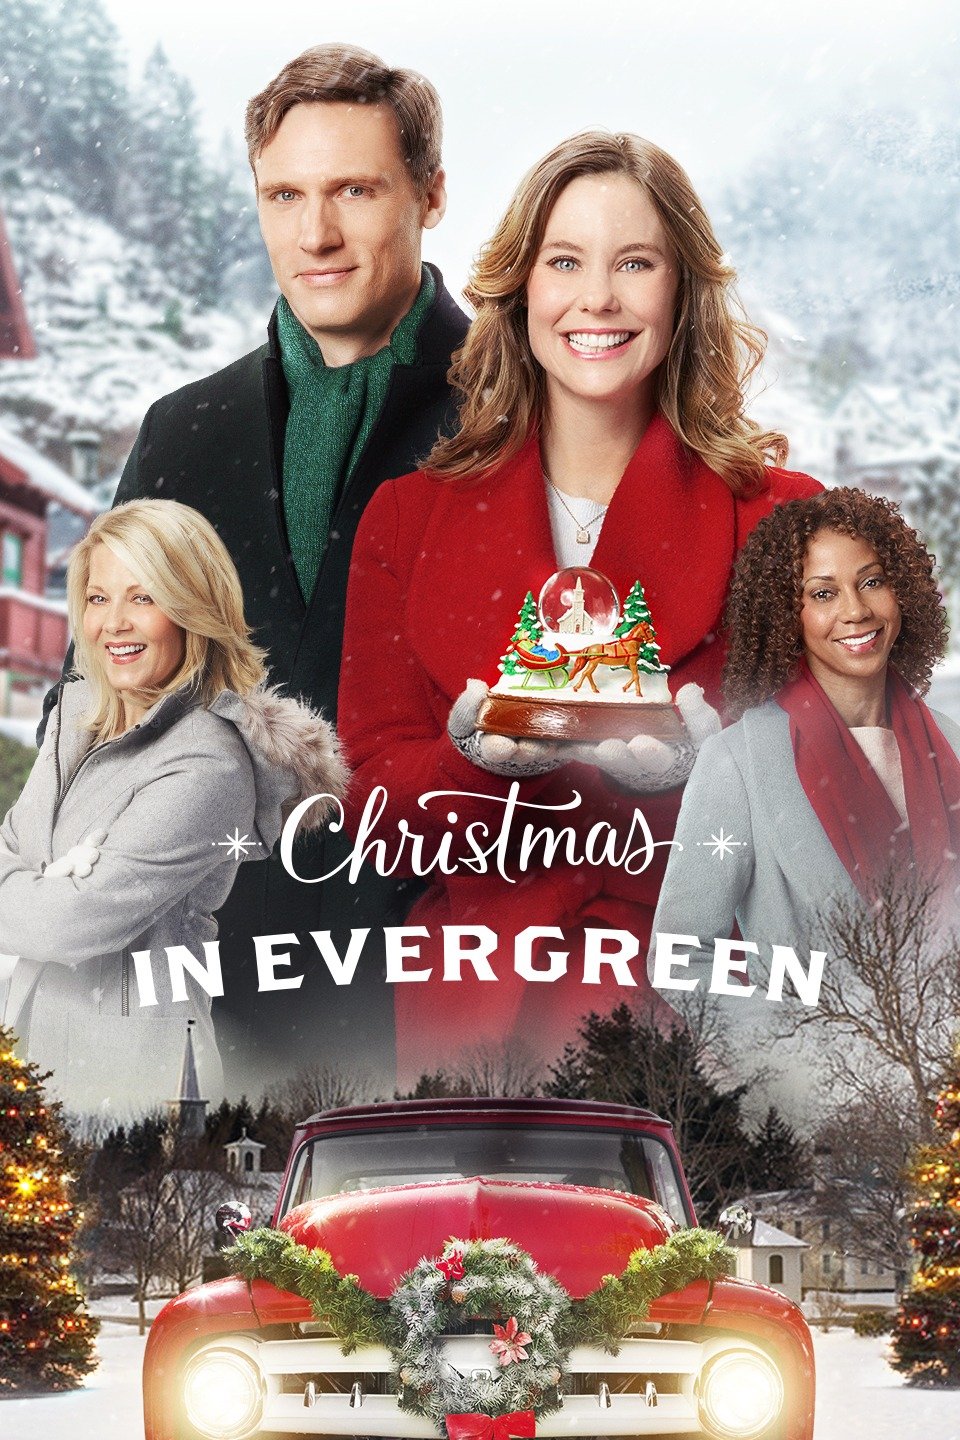 Nonton film Christmas In Evergreen layarkaca21 indoxx1 ganool online streaming terbaru